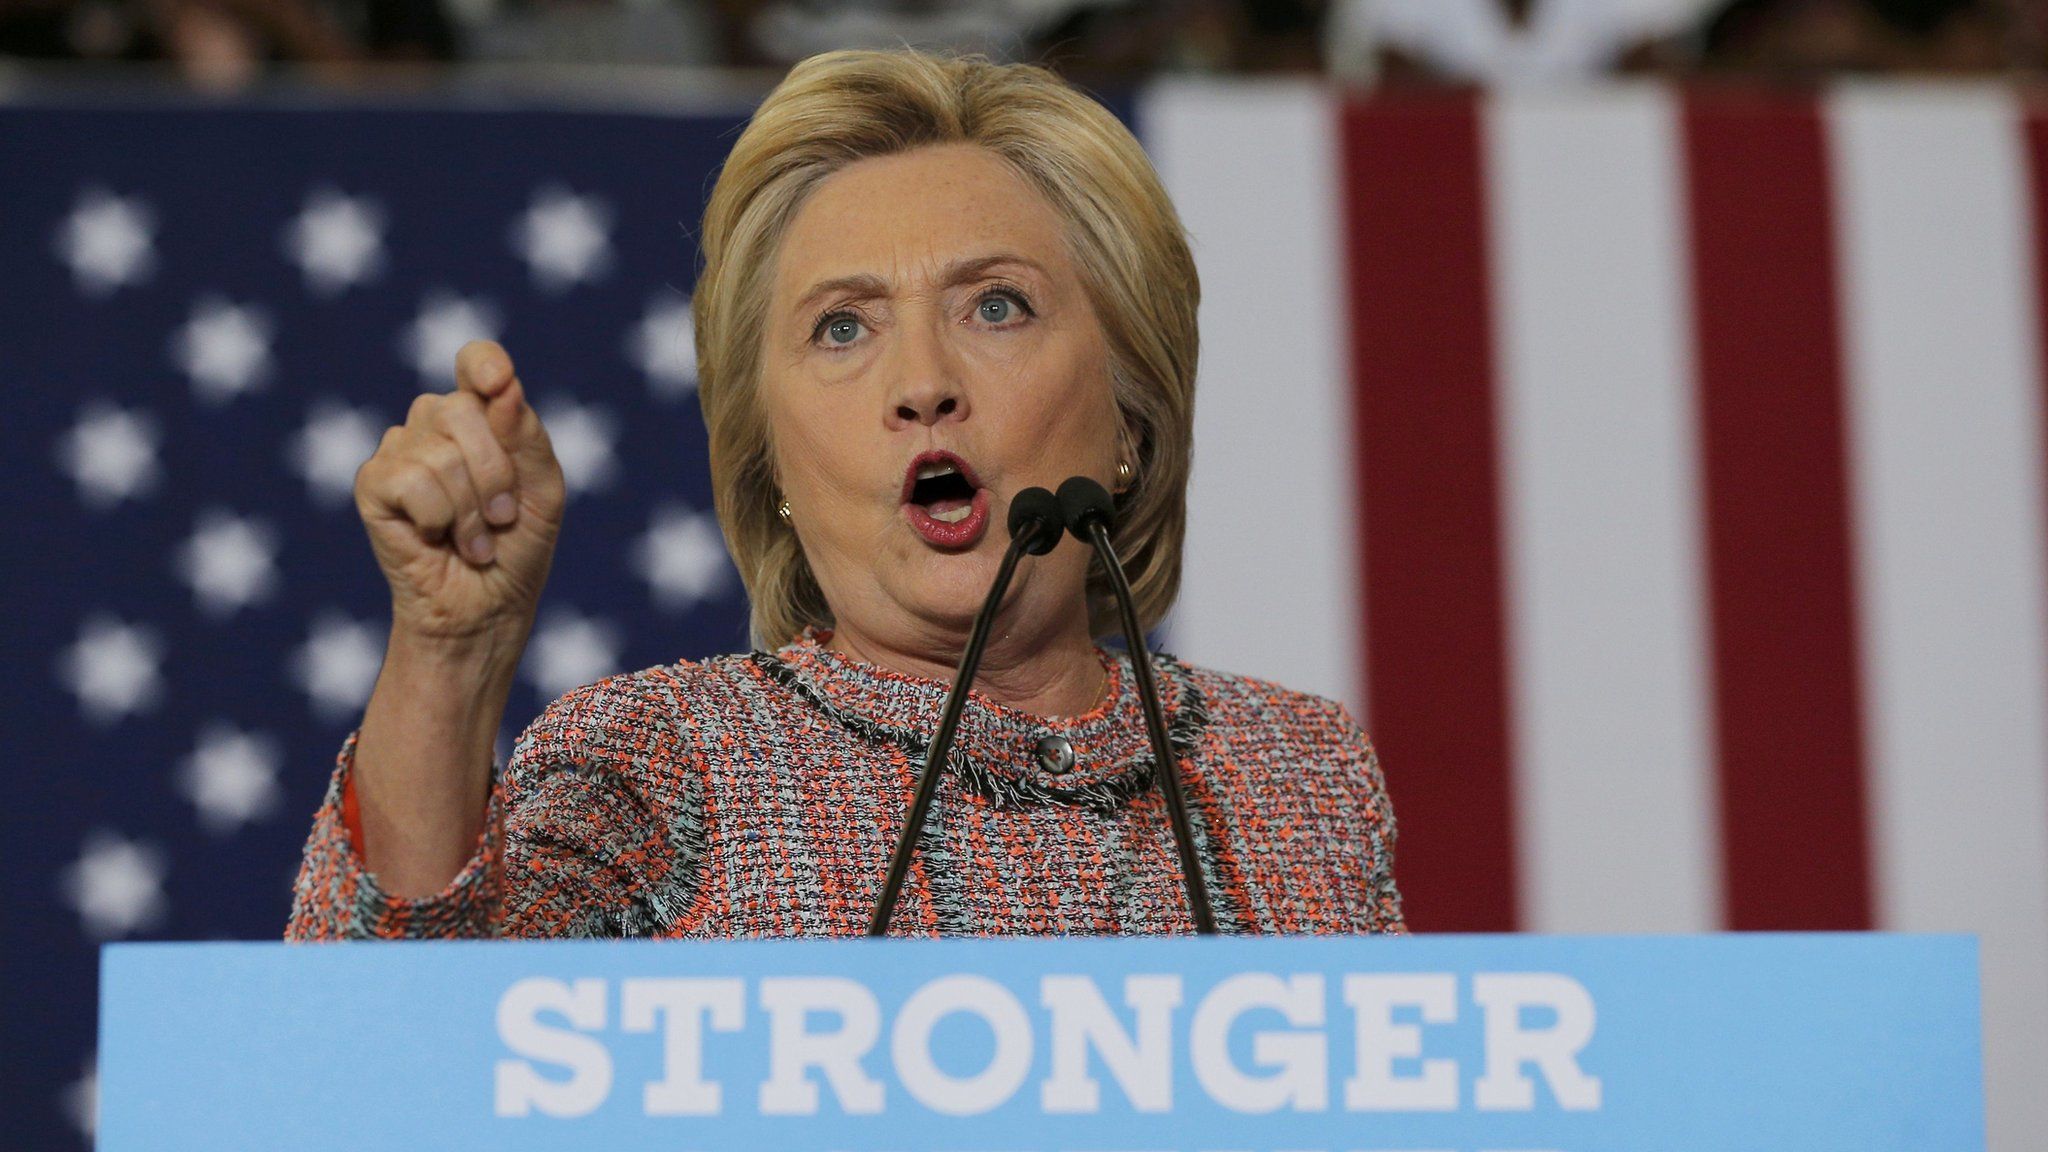 Hillary Clinton speaks at a campaign rally in Greensboro, North Carolina, U.S., September 15, 2016